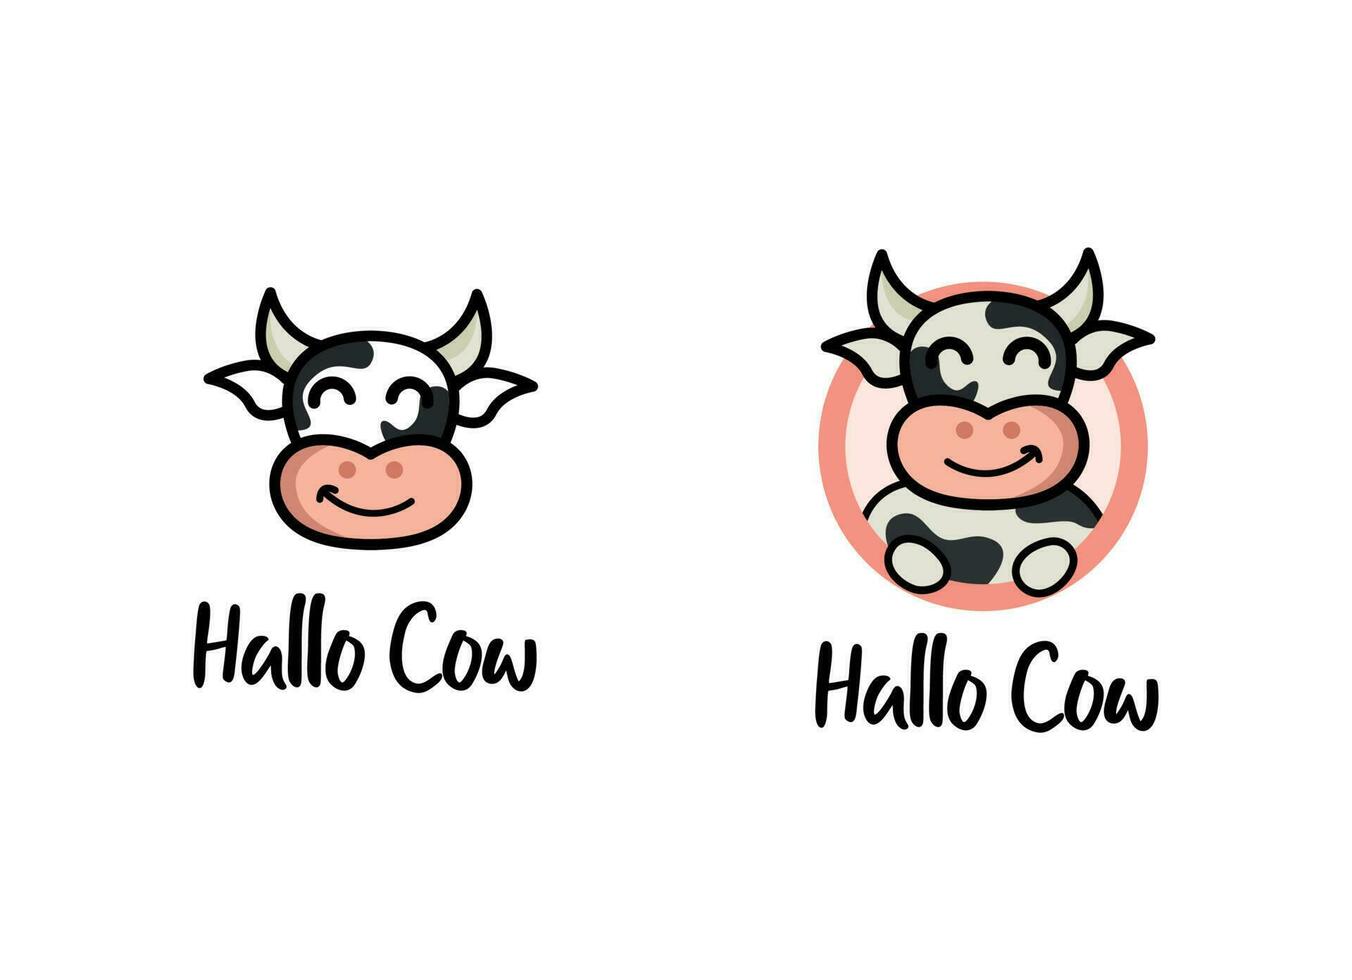 Happy cow logo vector illustration.